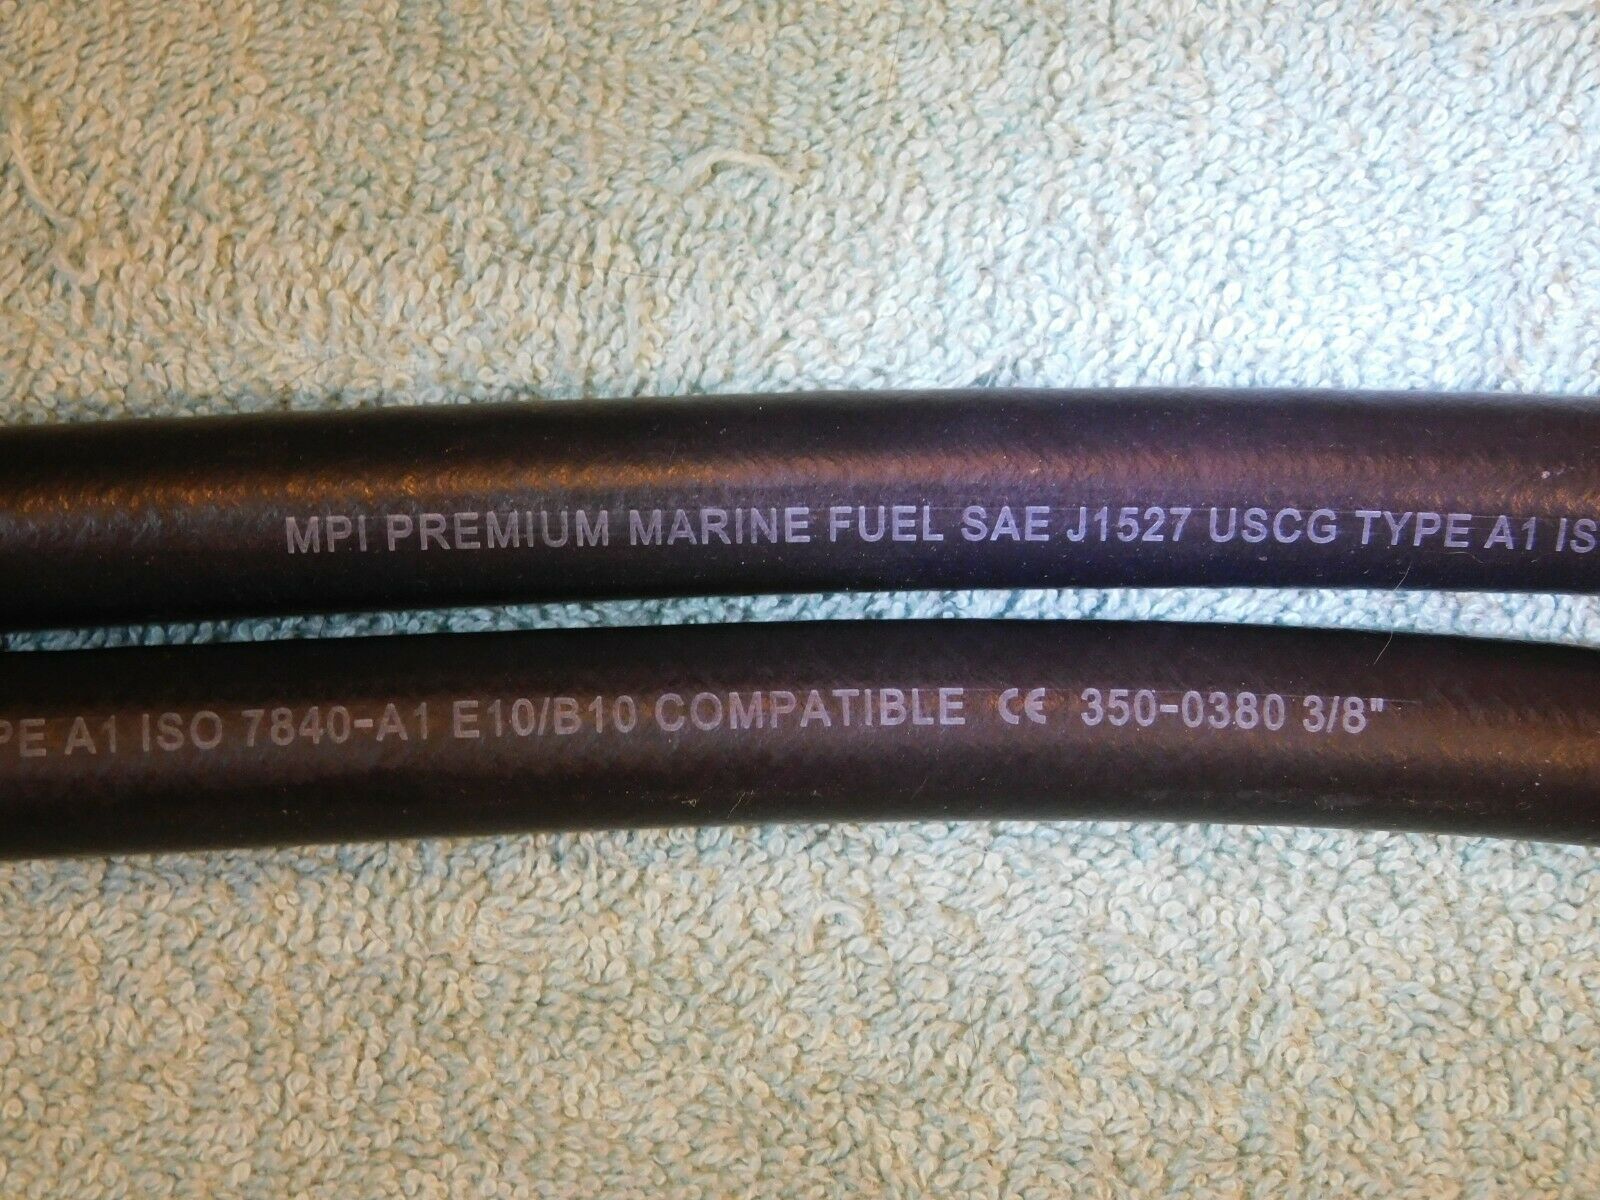 3/8" Id Mpi Premium Type A1 Marine Fuel Hose Line 7840-a1 Per Foot $5.99 To Ship